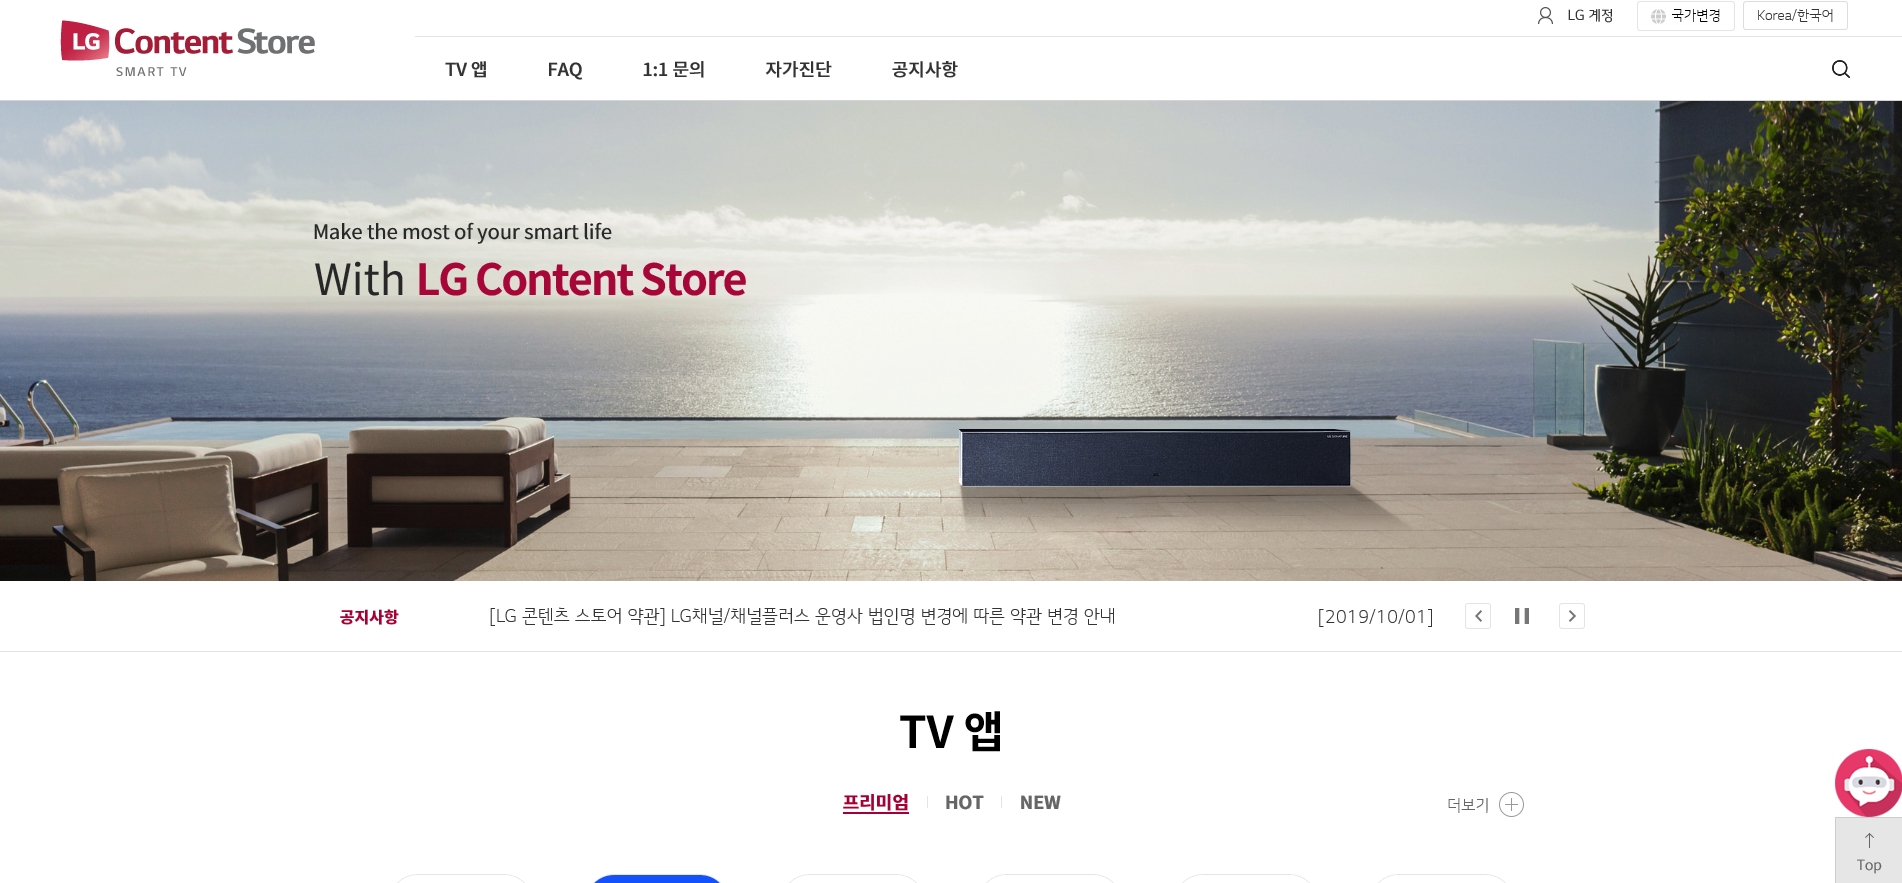 LG Content Store 스크릿샷